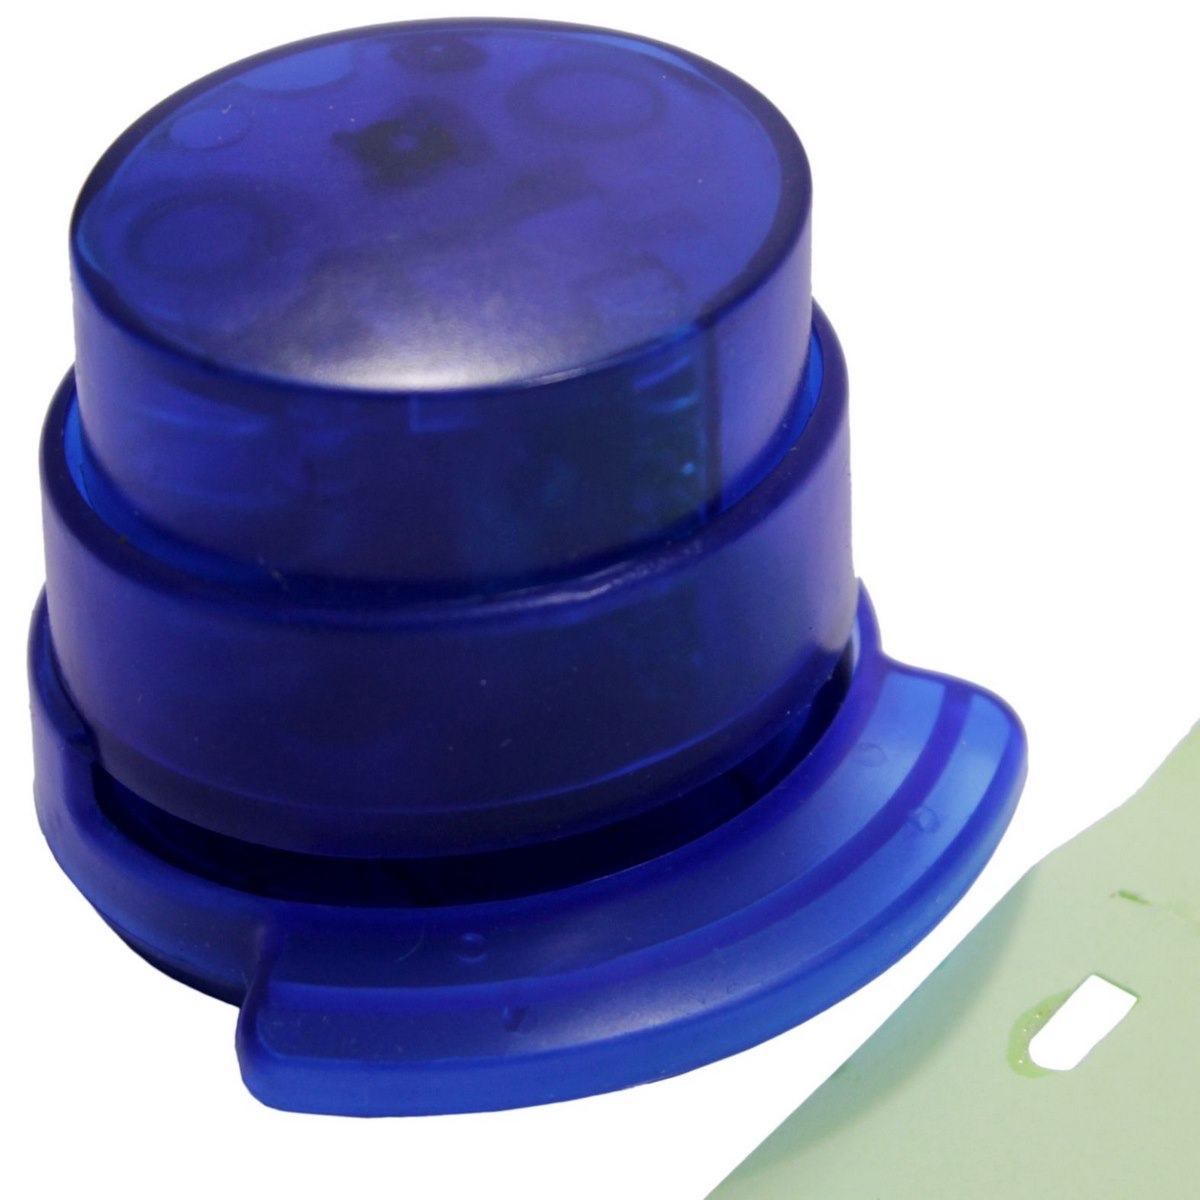 Blue Staple Free Stapler - For Shops, Schools, Corporates, Office Use JASTAPLE